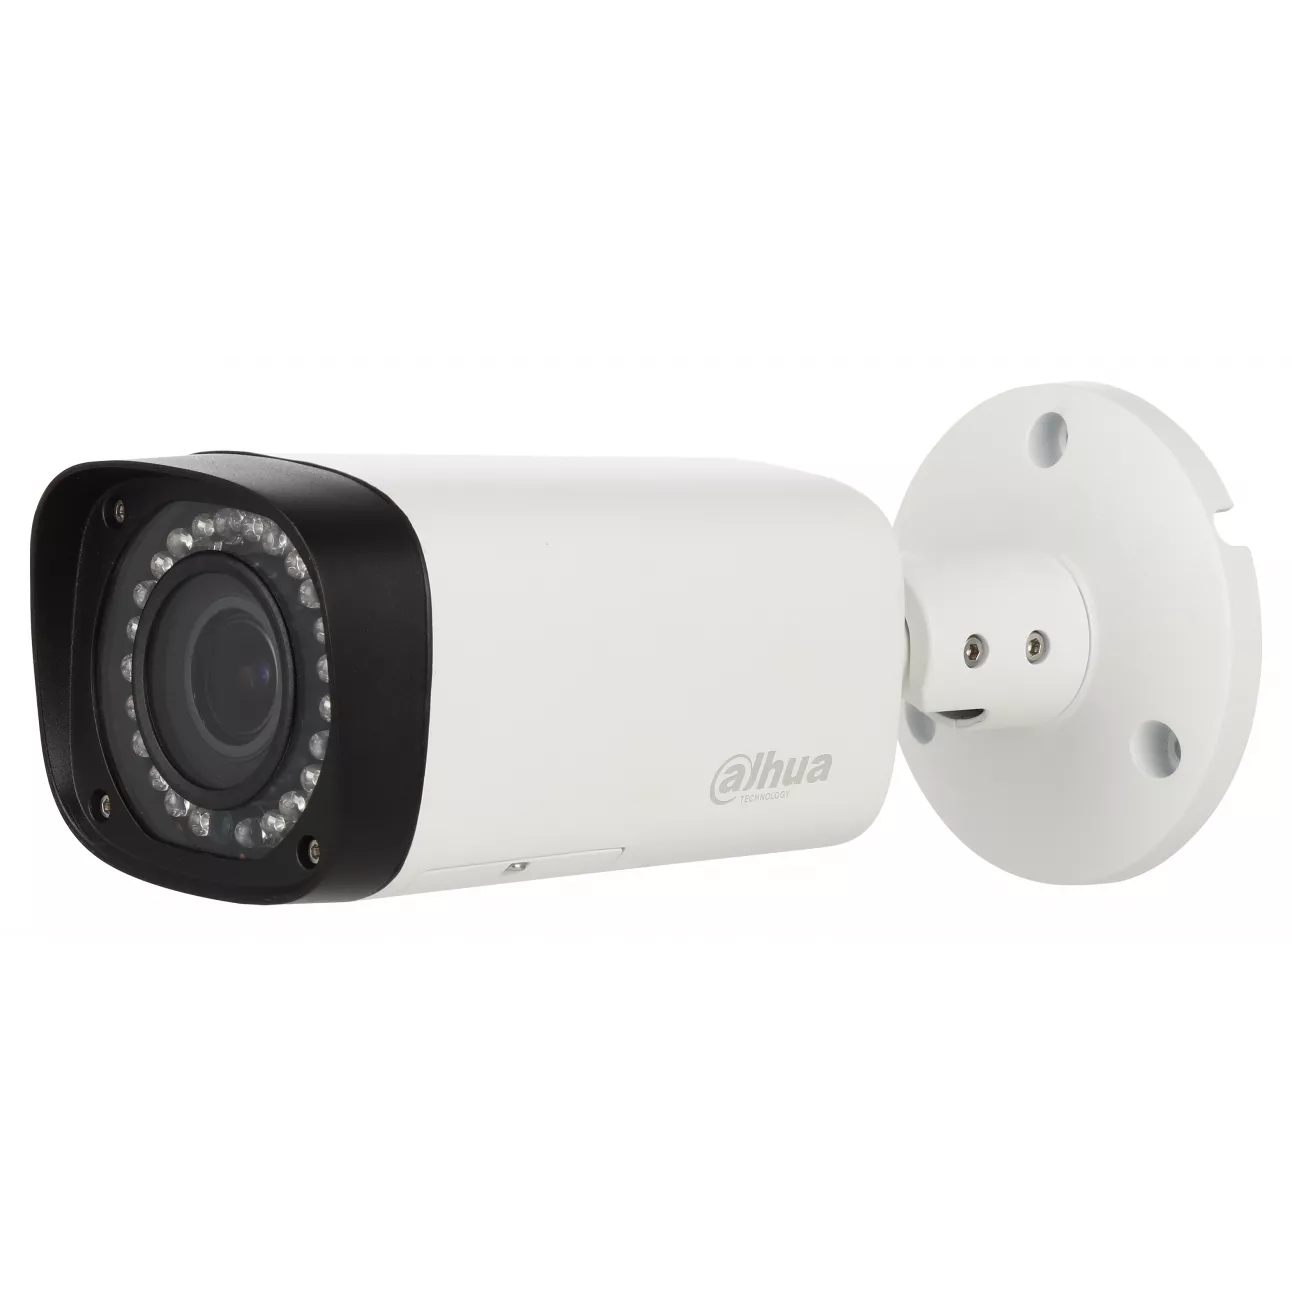 HDCVI уличная камера Dahua DH-HAC-HFW1200RP-VF-S3 1080p, 2.7-12мм, ИК до 30м, 12В (уценка)